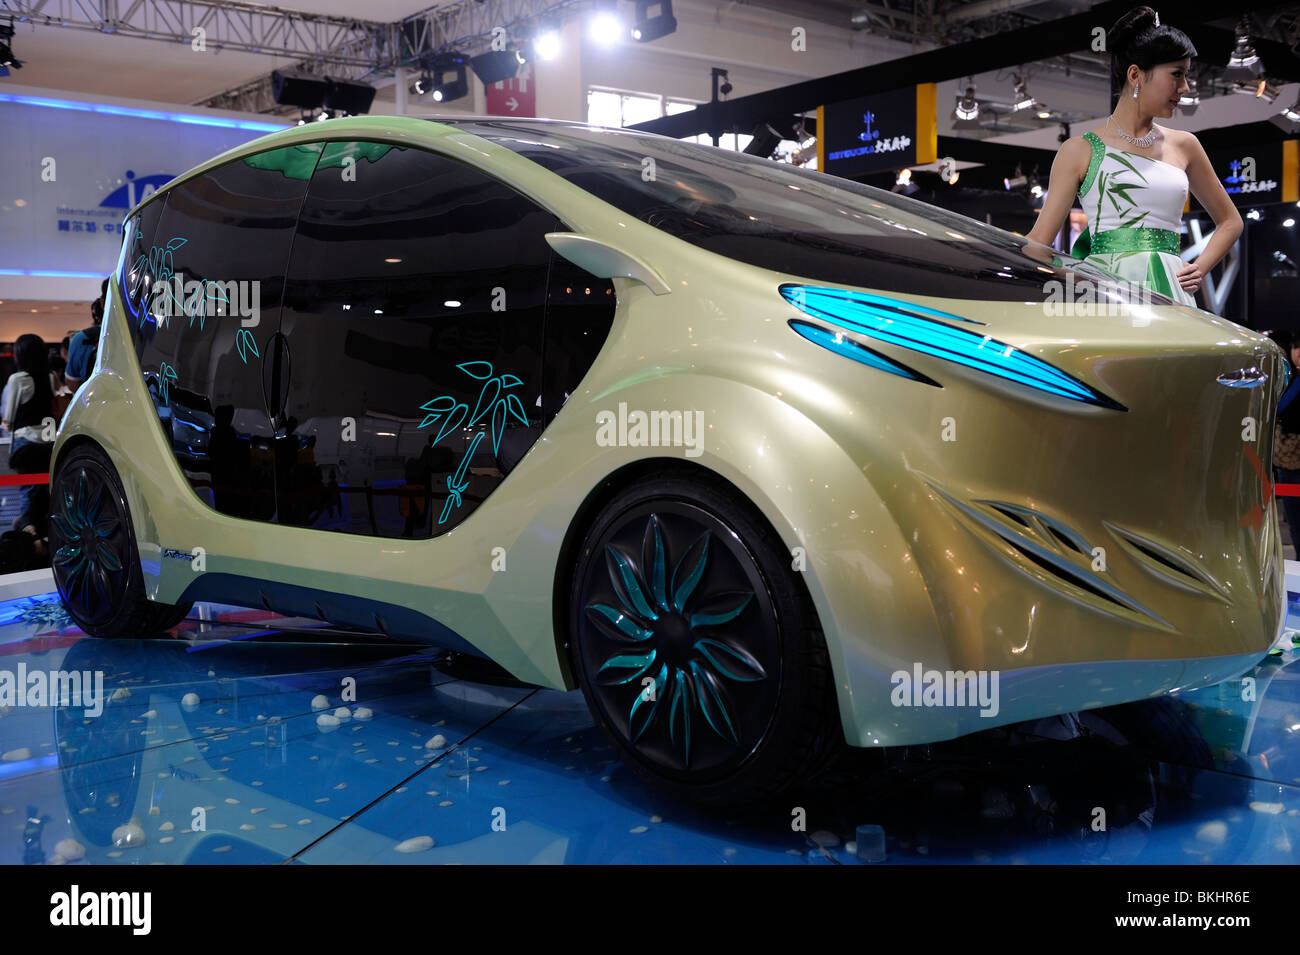 IAT (International Application Technology) 'Zu' electric concept car at Beijing Auto Show 2010. Stock Photo